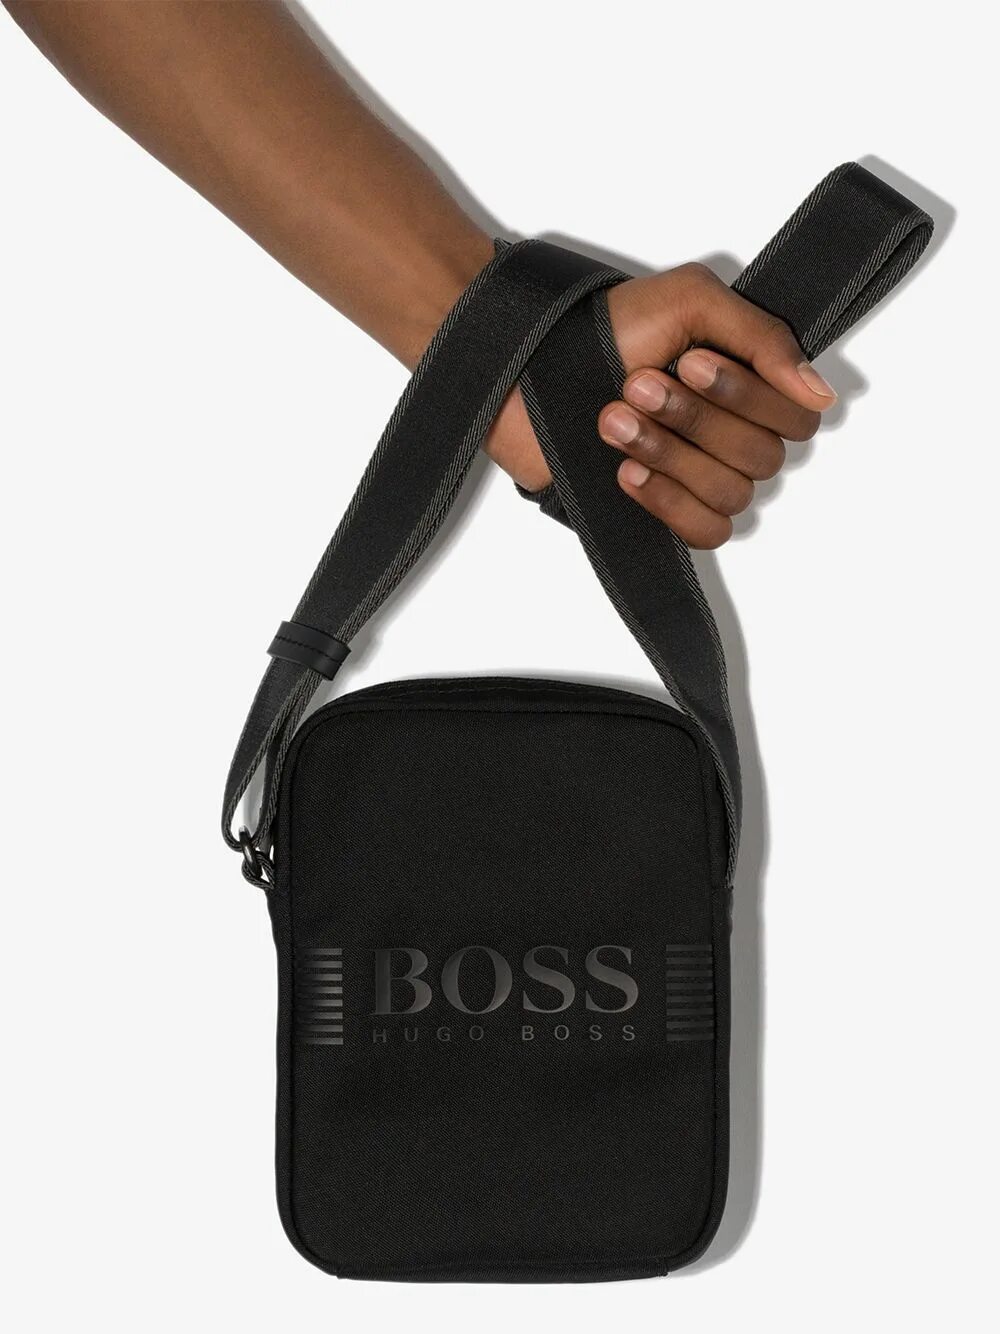 Сумка Cross body Boss. Сумка через плечо Hugo Boss черная мужская. Черная сумка Hugo Boss женская через плечо. Сумка Hugo Boss через плечо с сеткой.